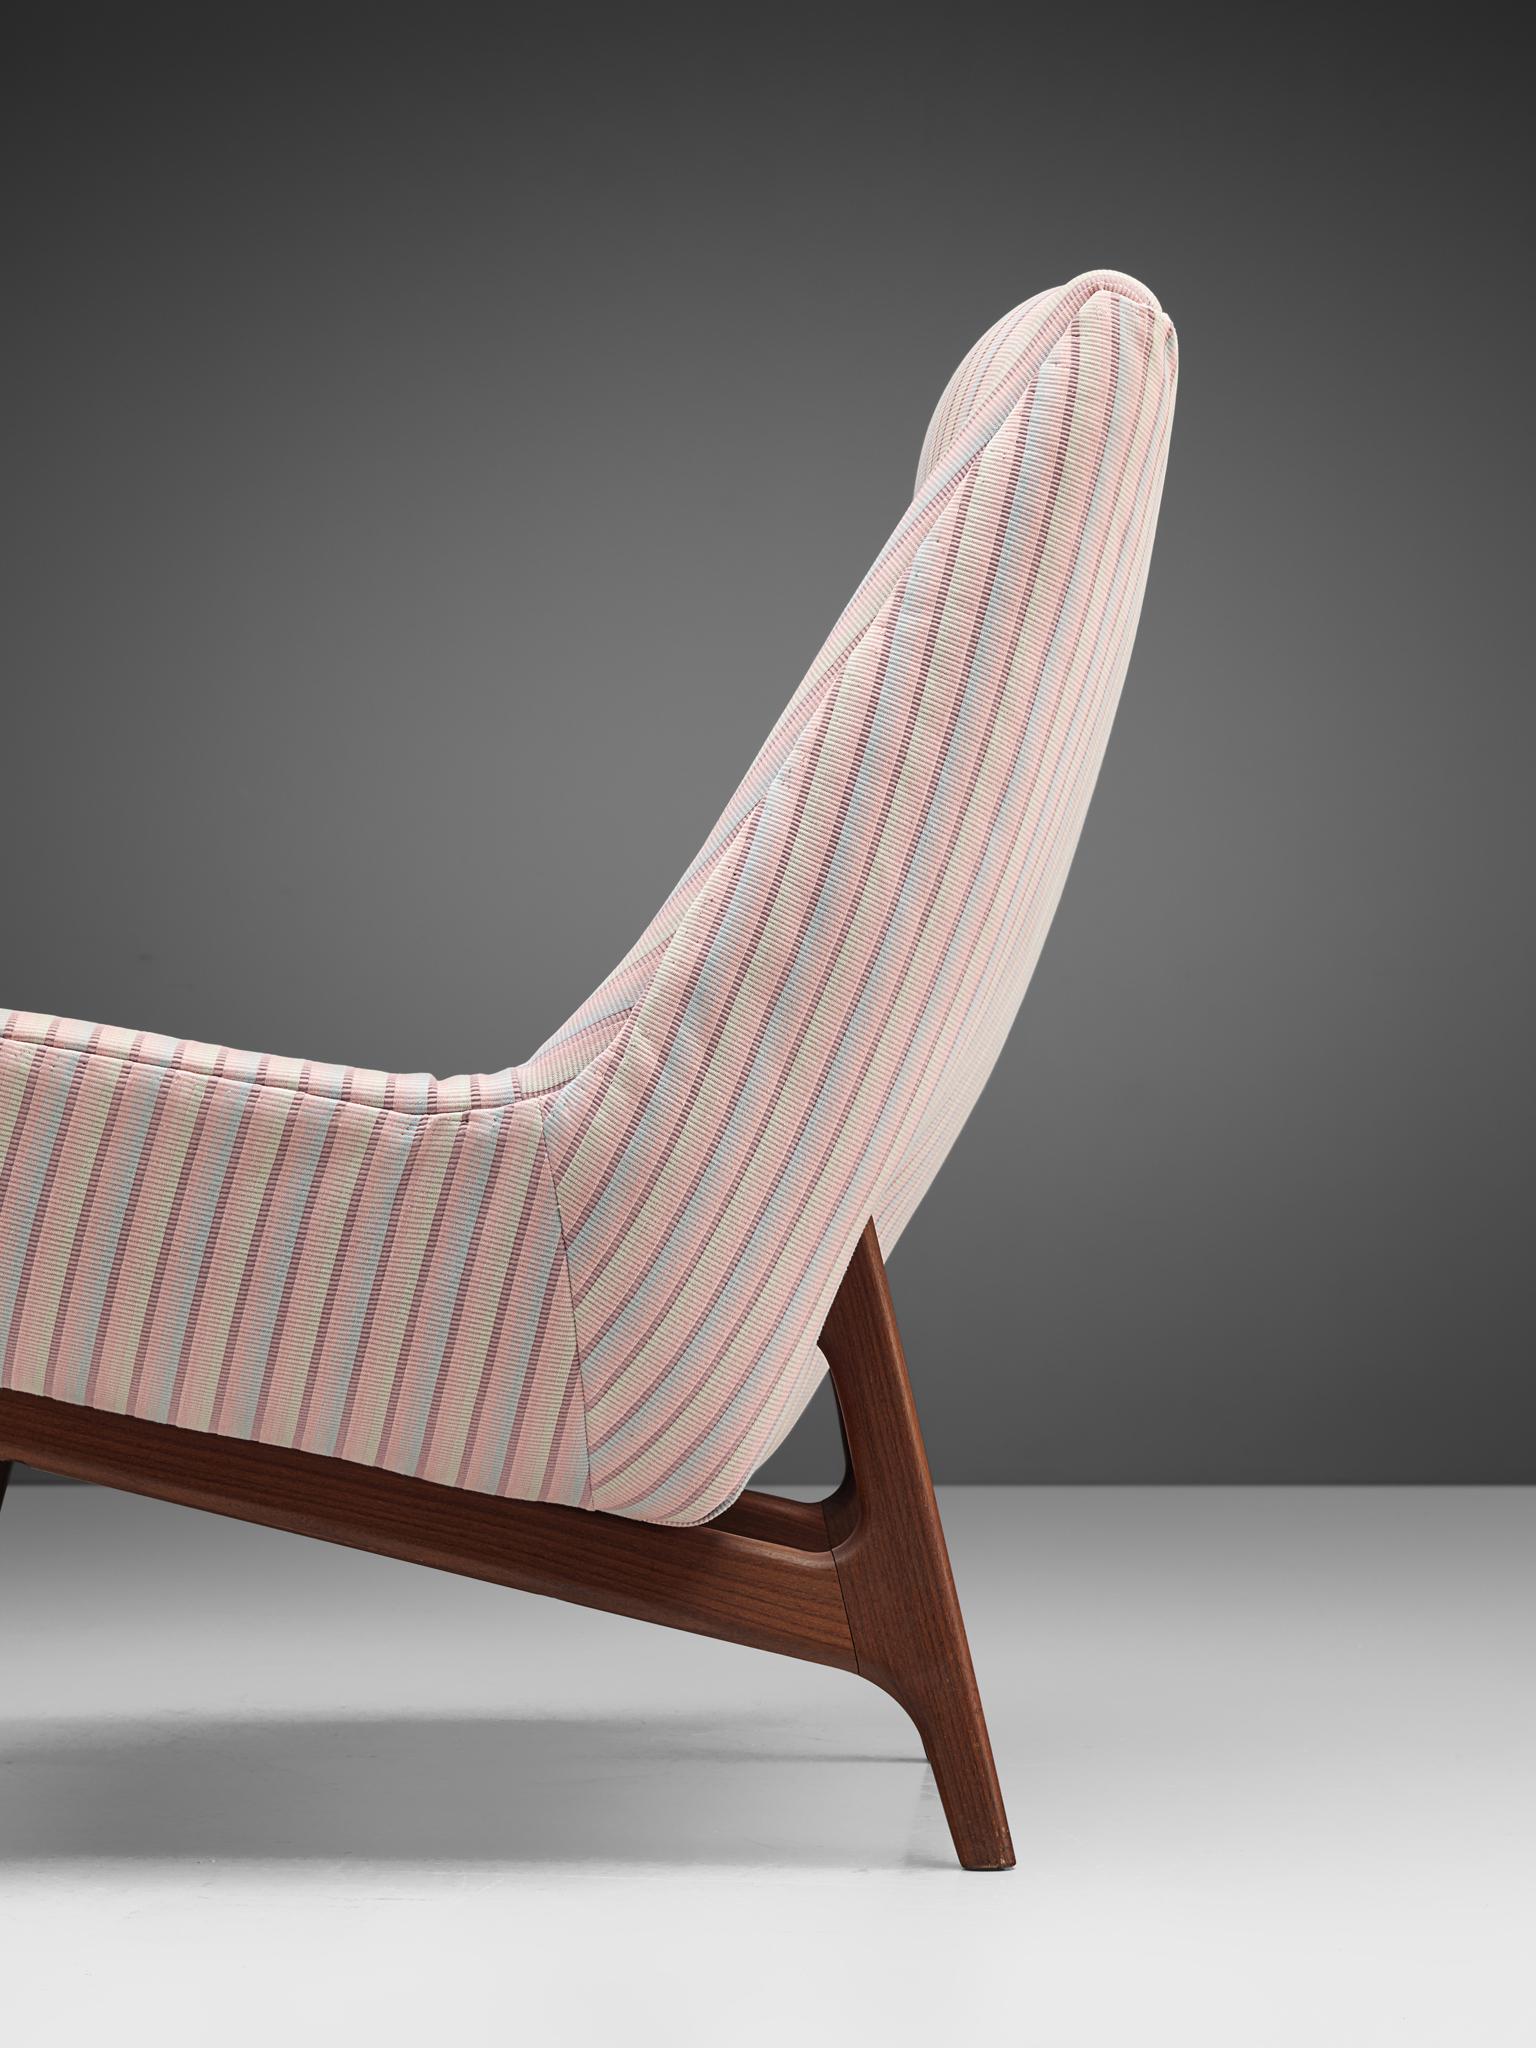 Scandinavian Modern Lounge Chair in Pink Striped Upholstery